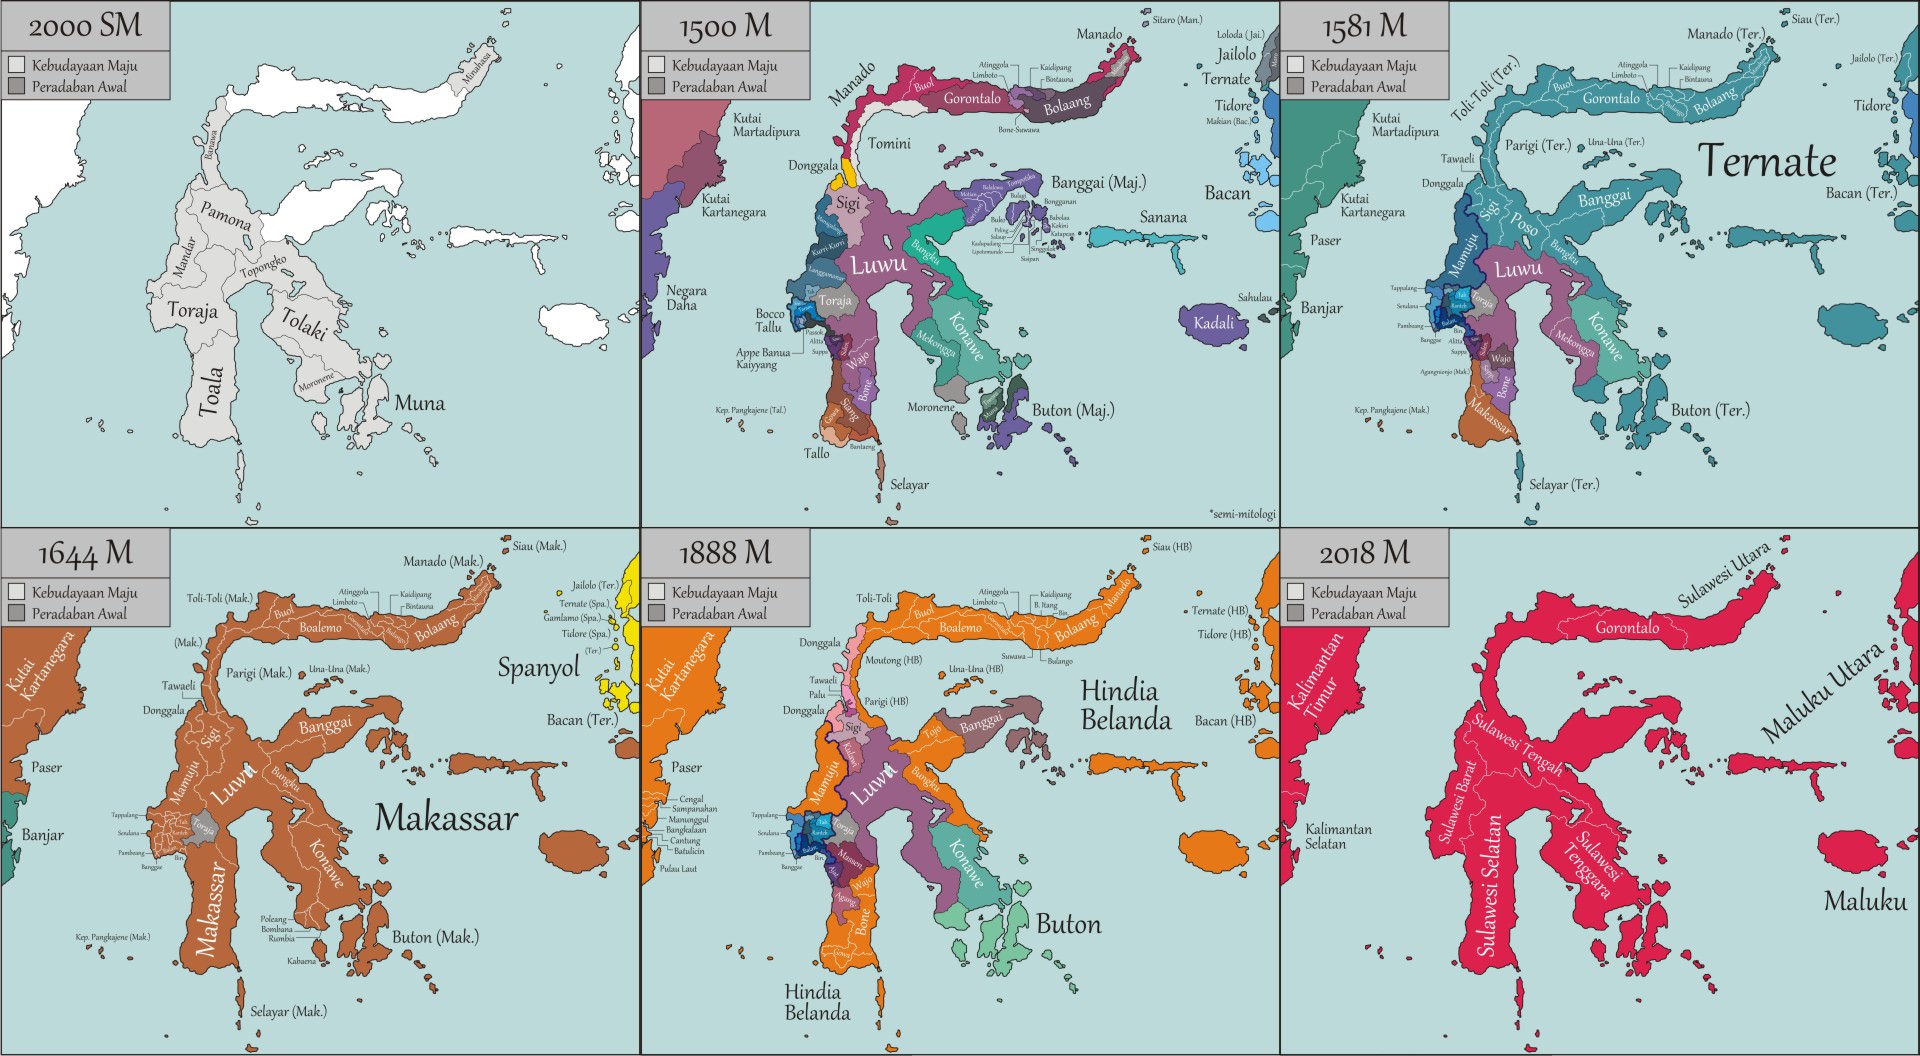 Kronologi Sejarah Sulawesi / Celebes (40.000 SM - 2018)